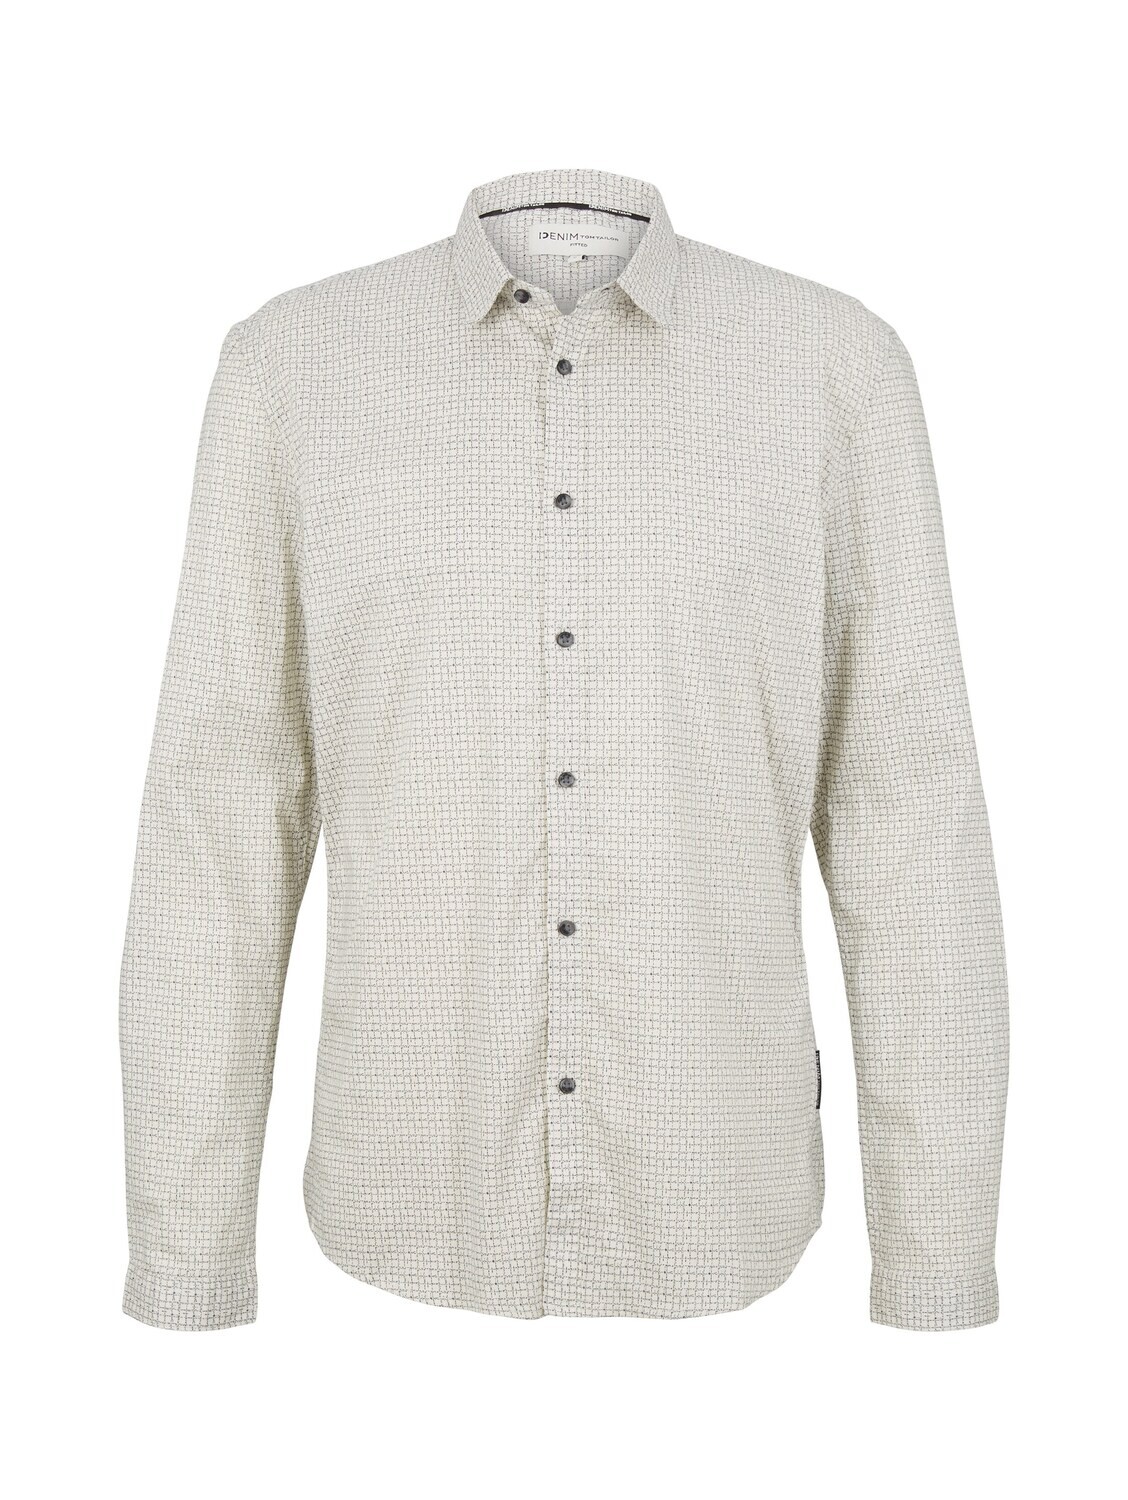 Tom Tailor overhemd met print, creme scratched check print